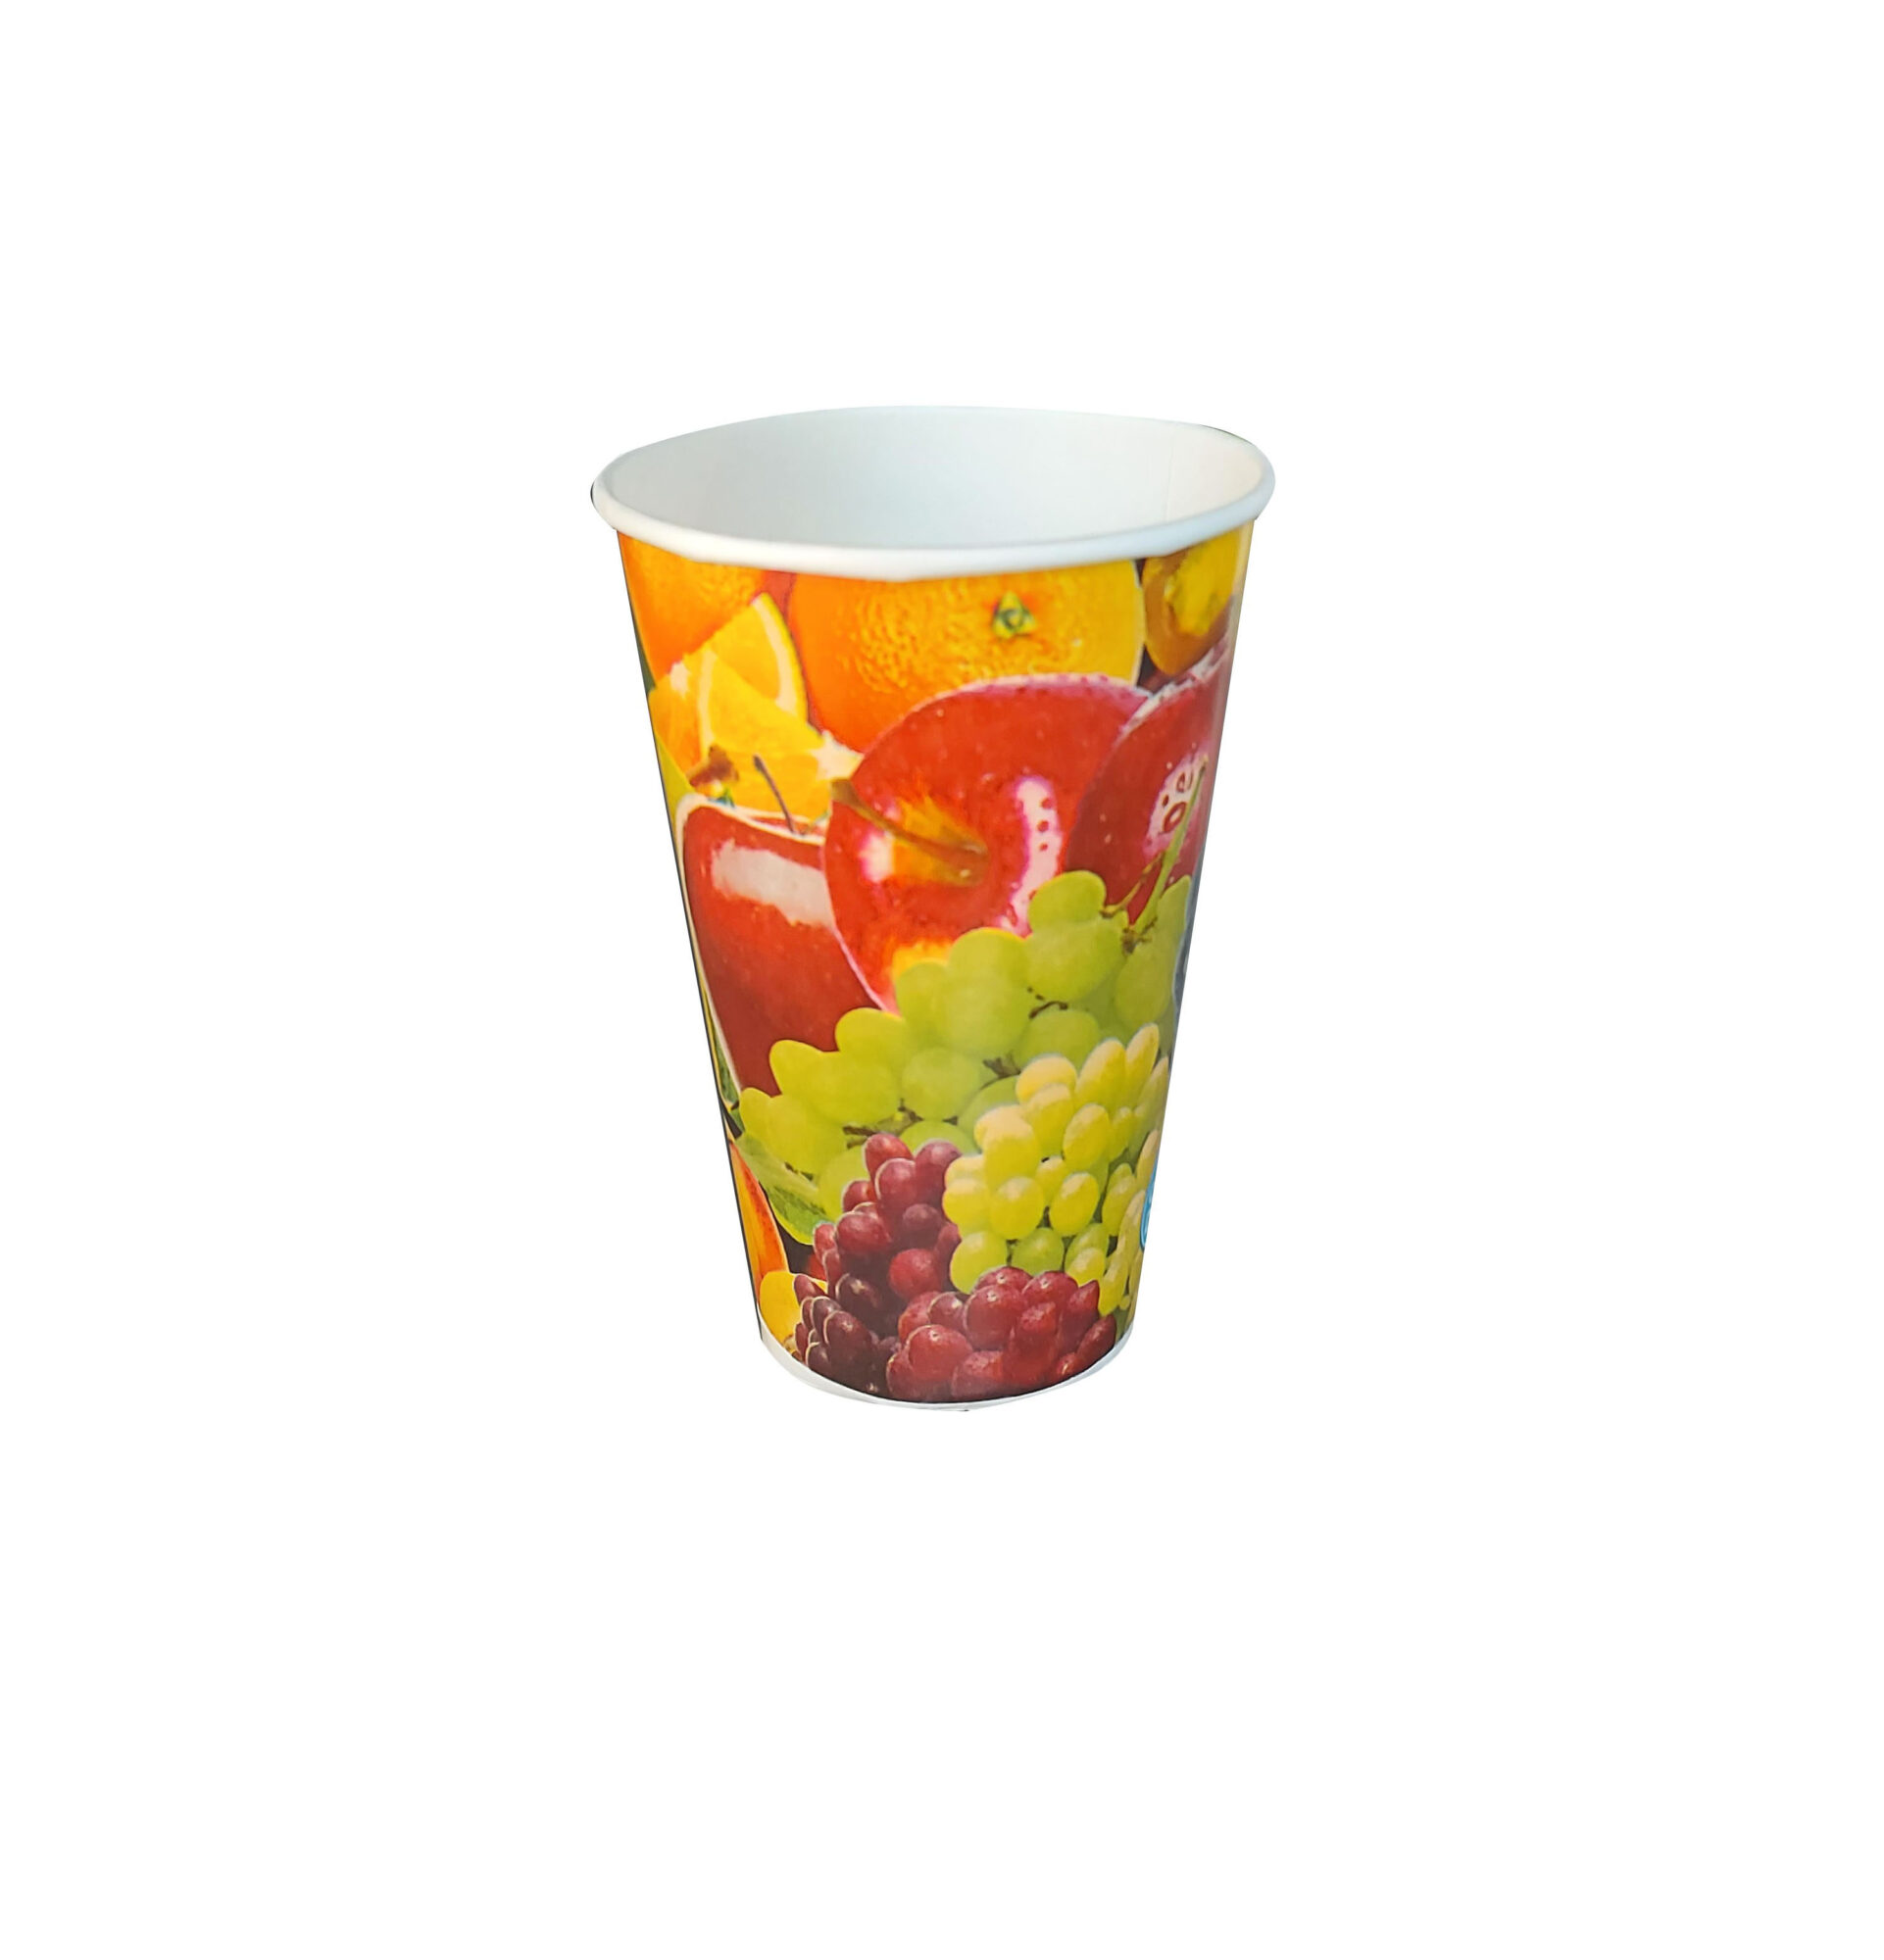 Paper Juice Cup, Packet Size (pieces): 50 Pieces